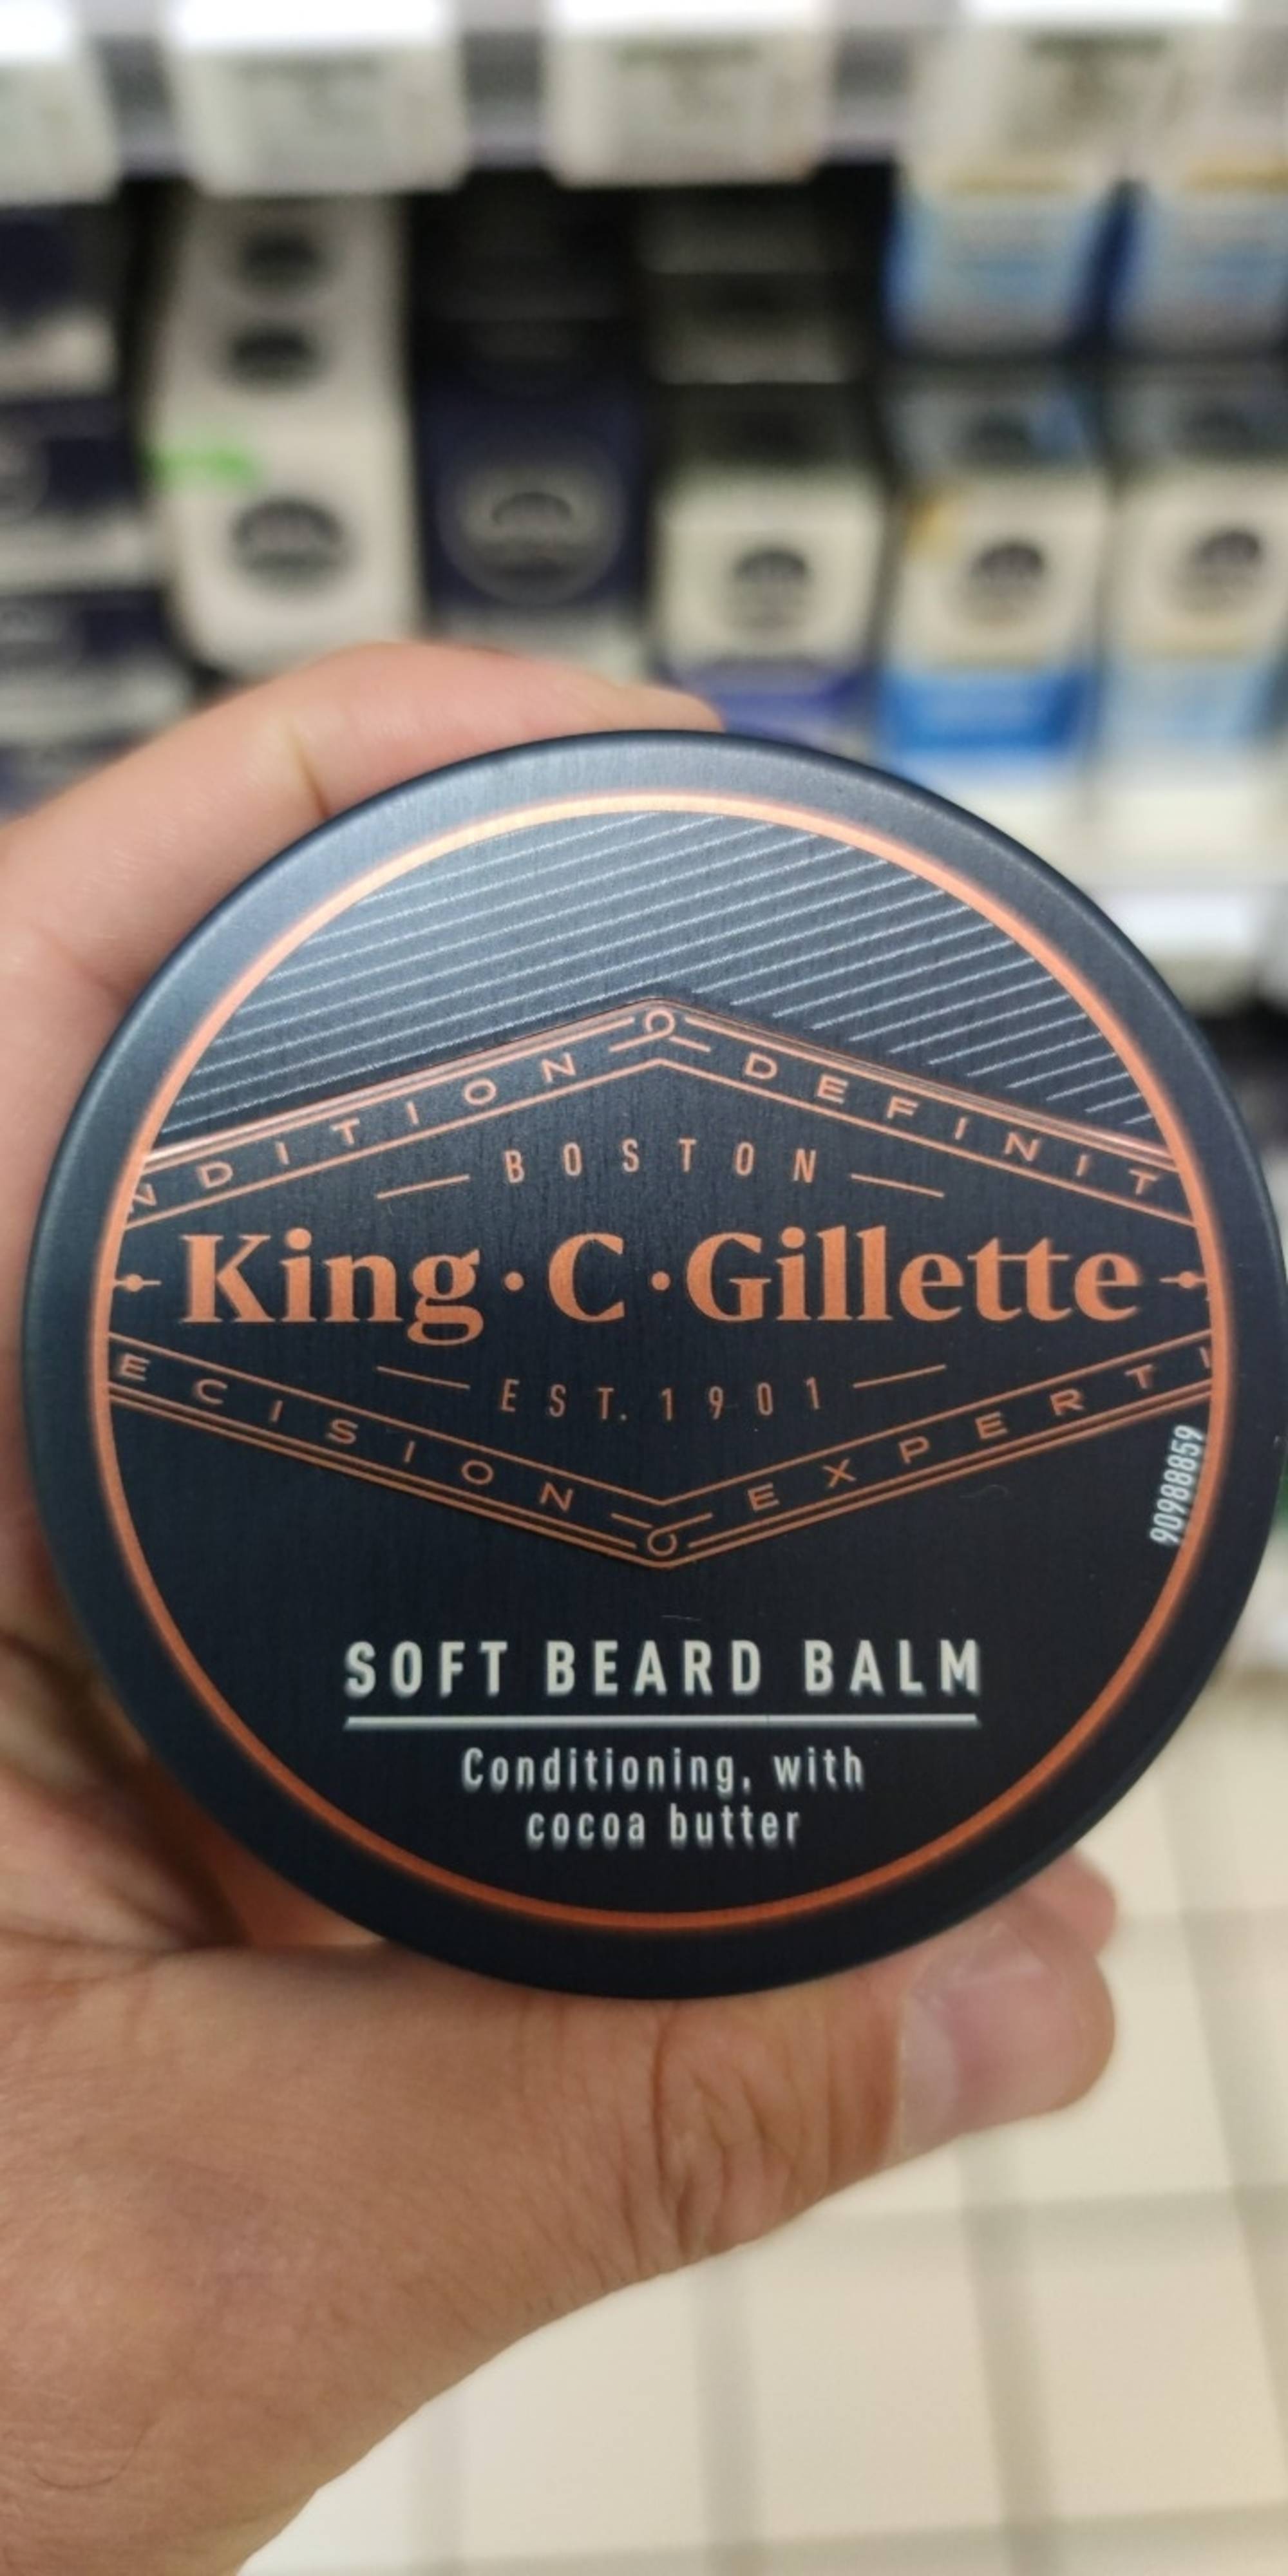 KING C GILLETTE - Soft beard balm